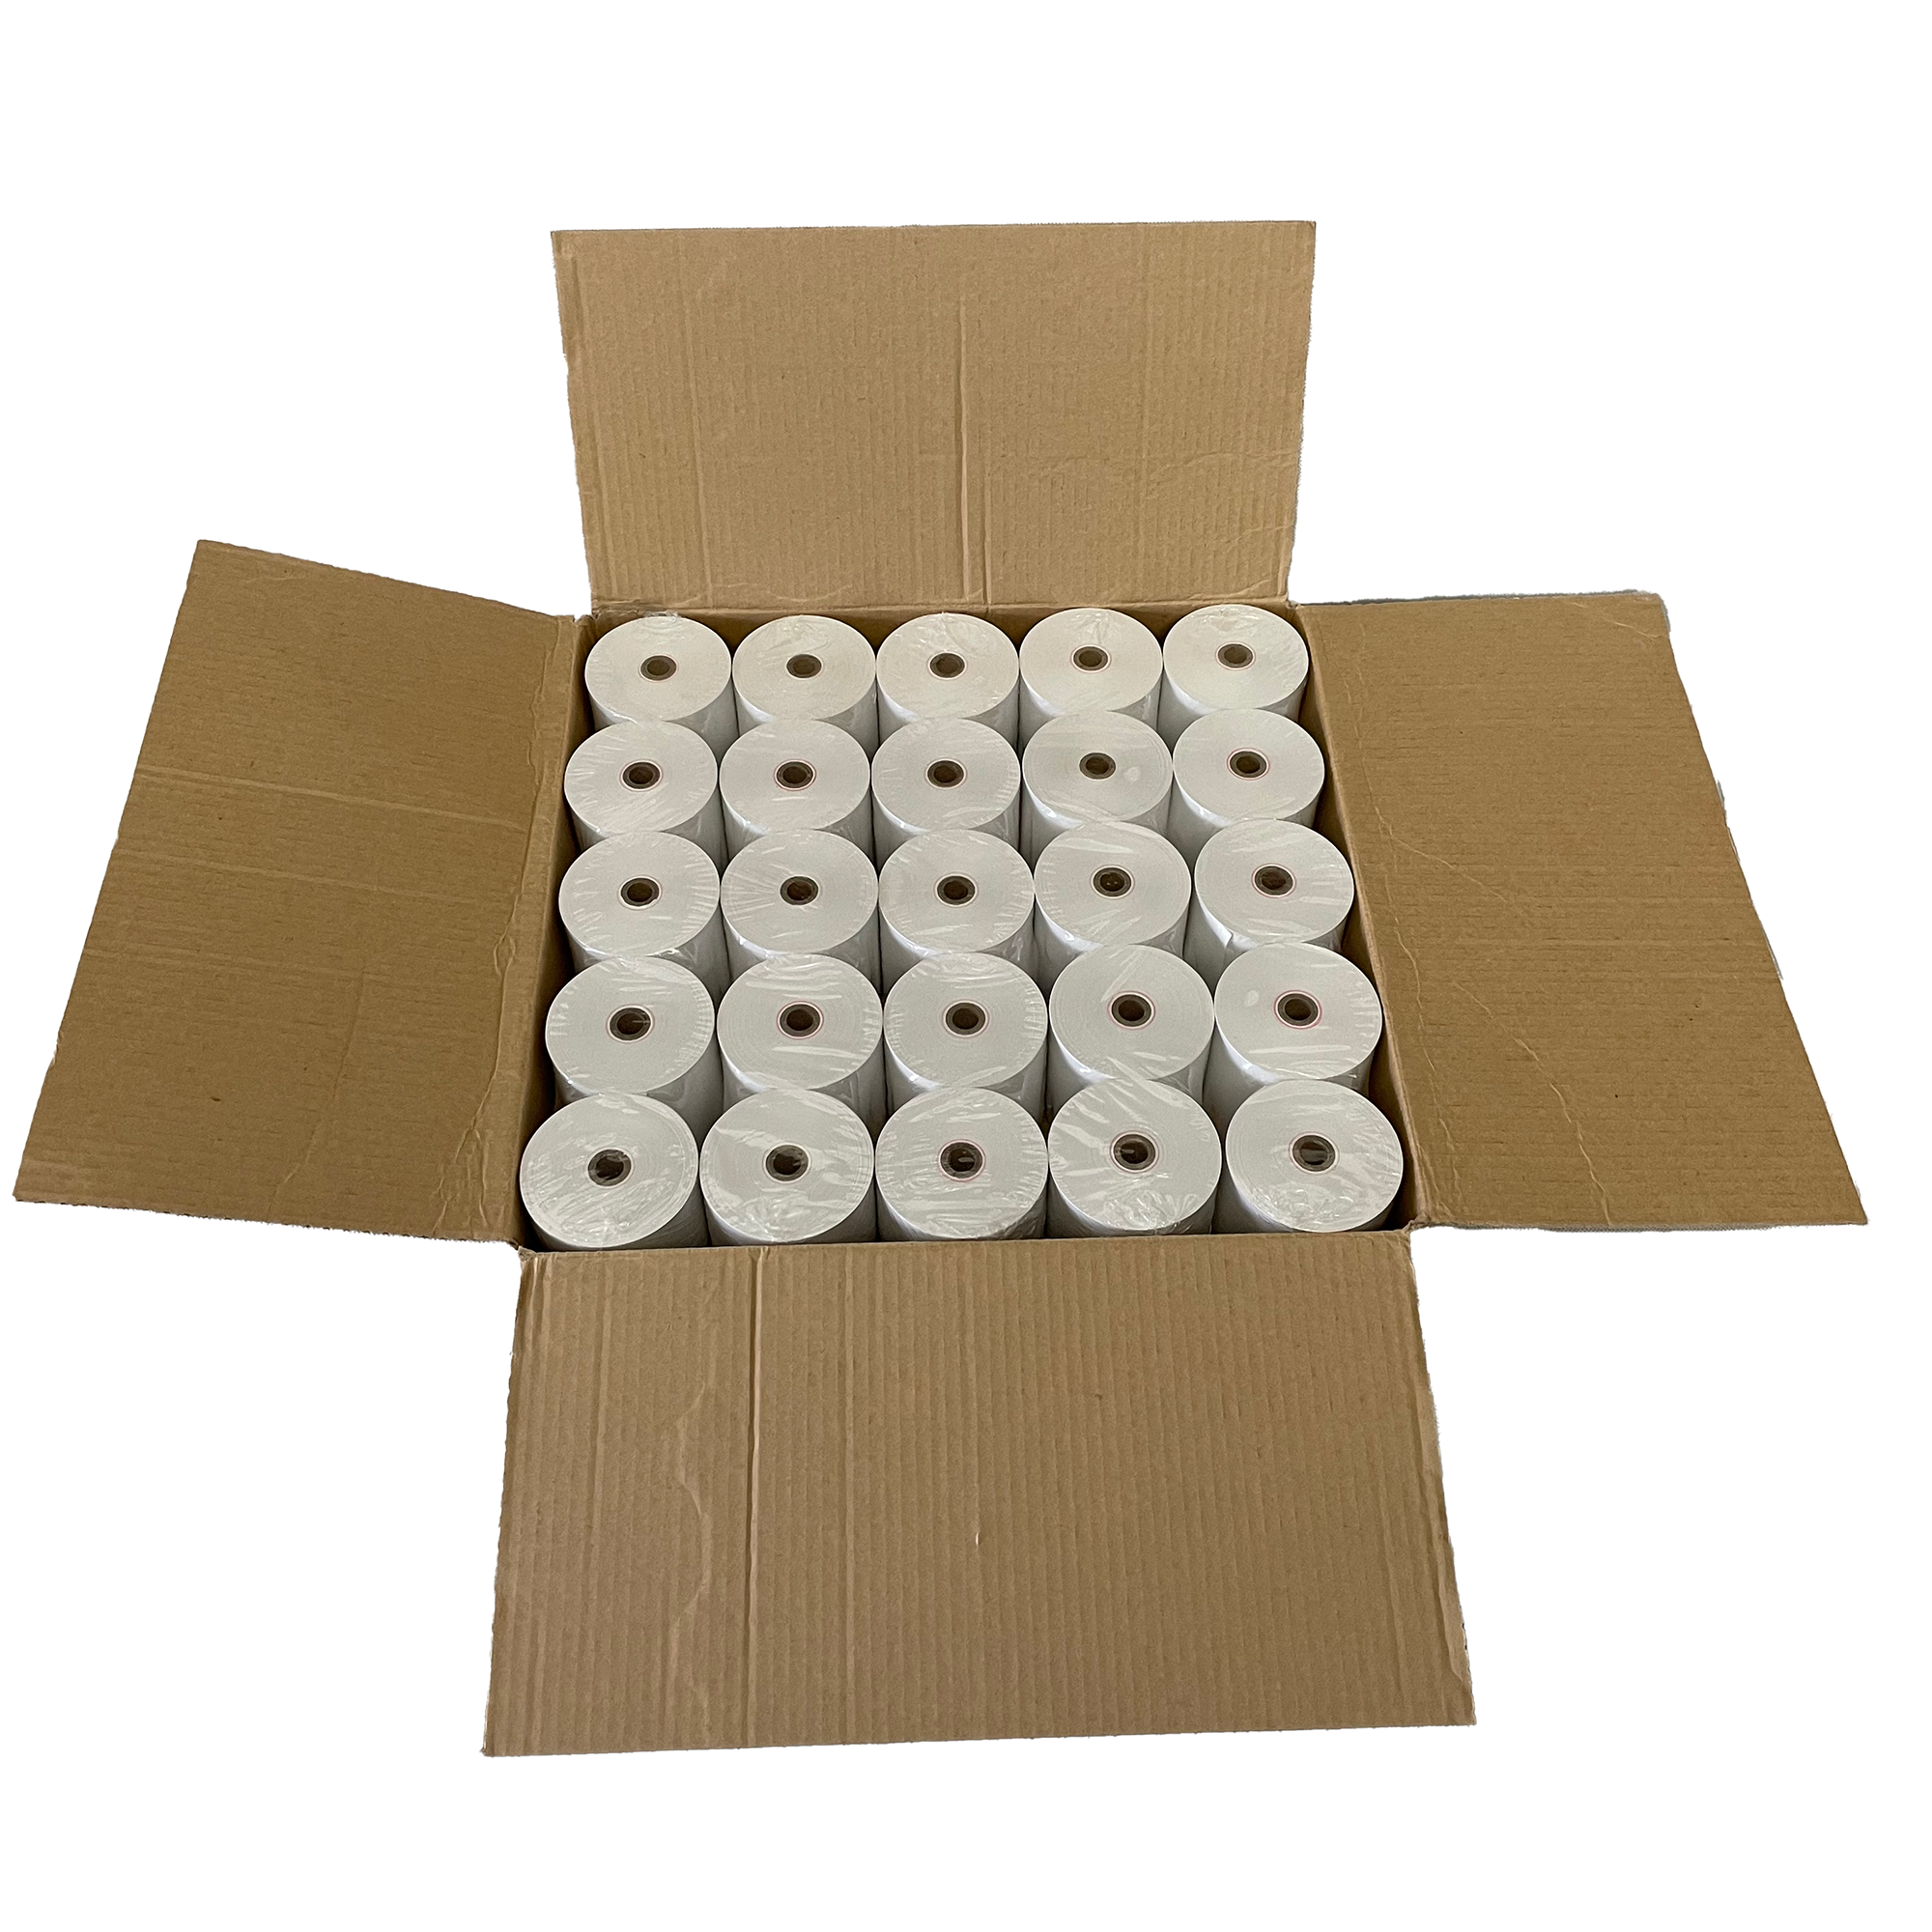 80mm POS Thermal Receipt Paper Rolls for most receipt printers NZ 80x80